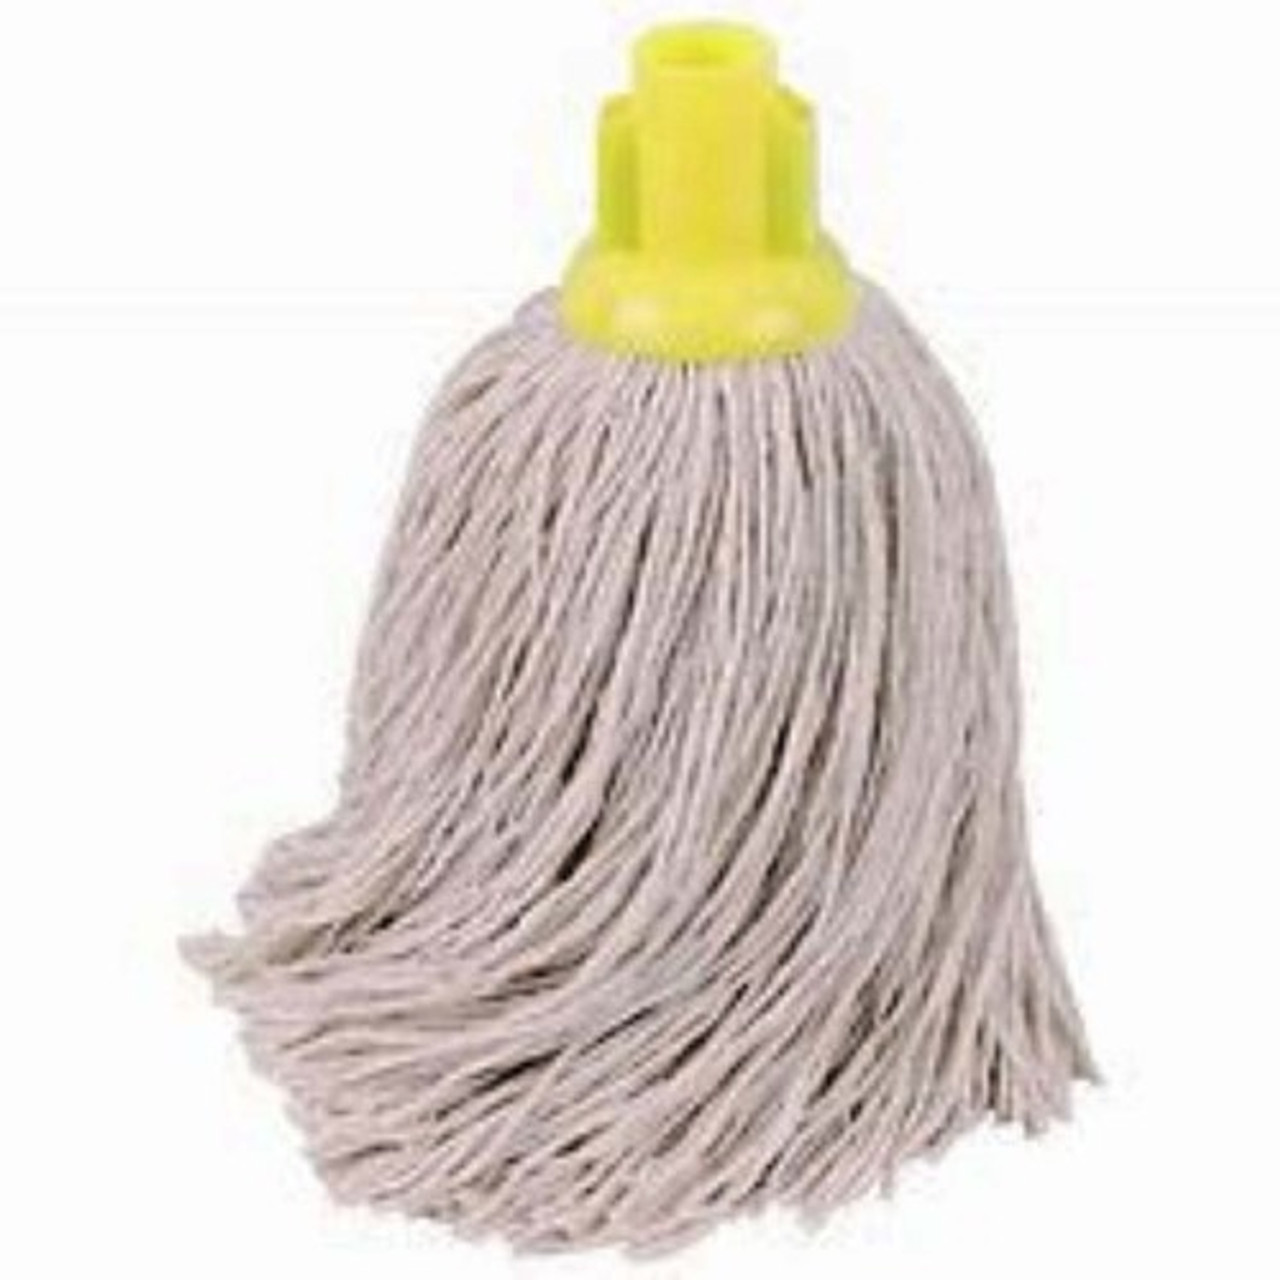 Wool mop head 14py Yellow plastic universal fitting